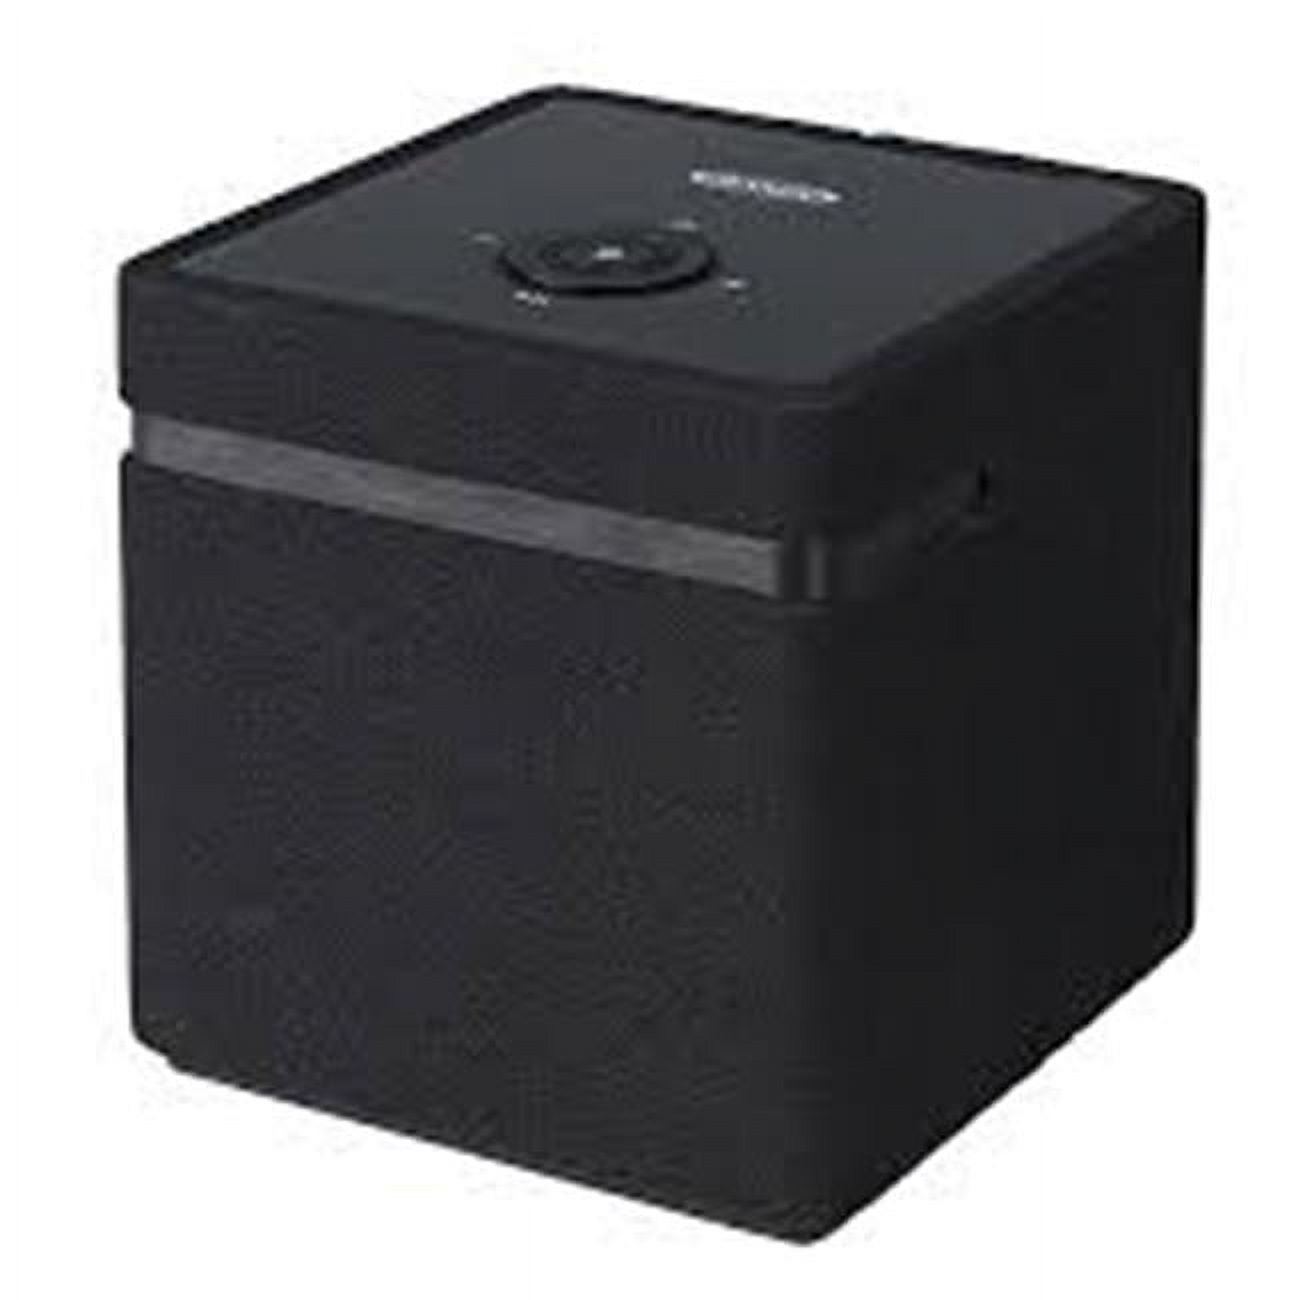 Jensen JSB-1000 Bluetooth Wi-Fi Stereo Smart Speaker With Chromecast - image 1 of 1